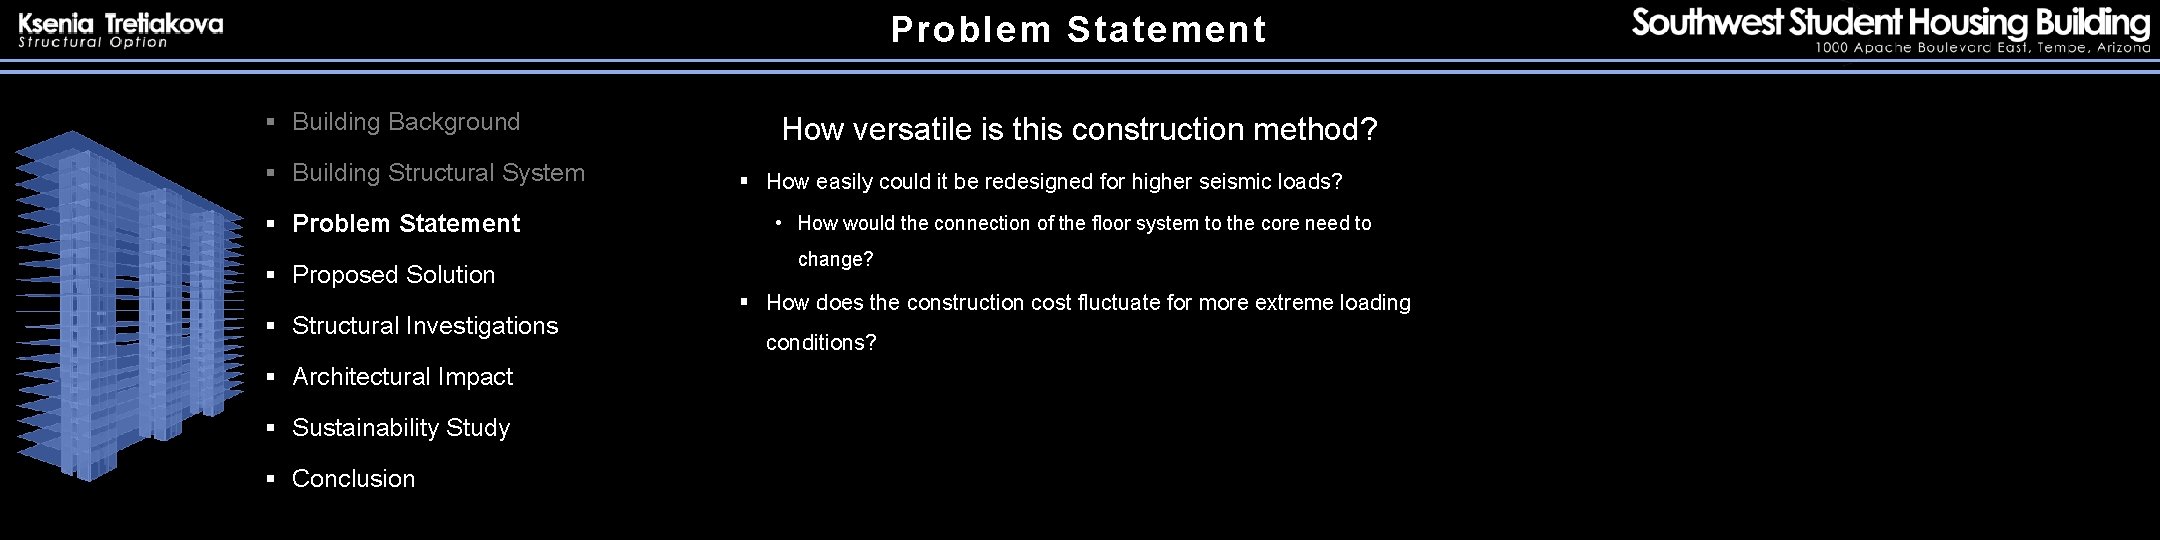 Problem Statement § Building Background § Building Structural System § Problem Statement § Proposed